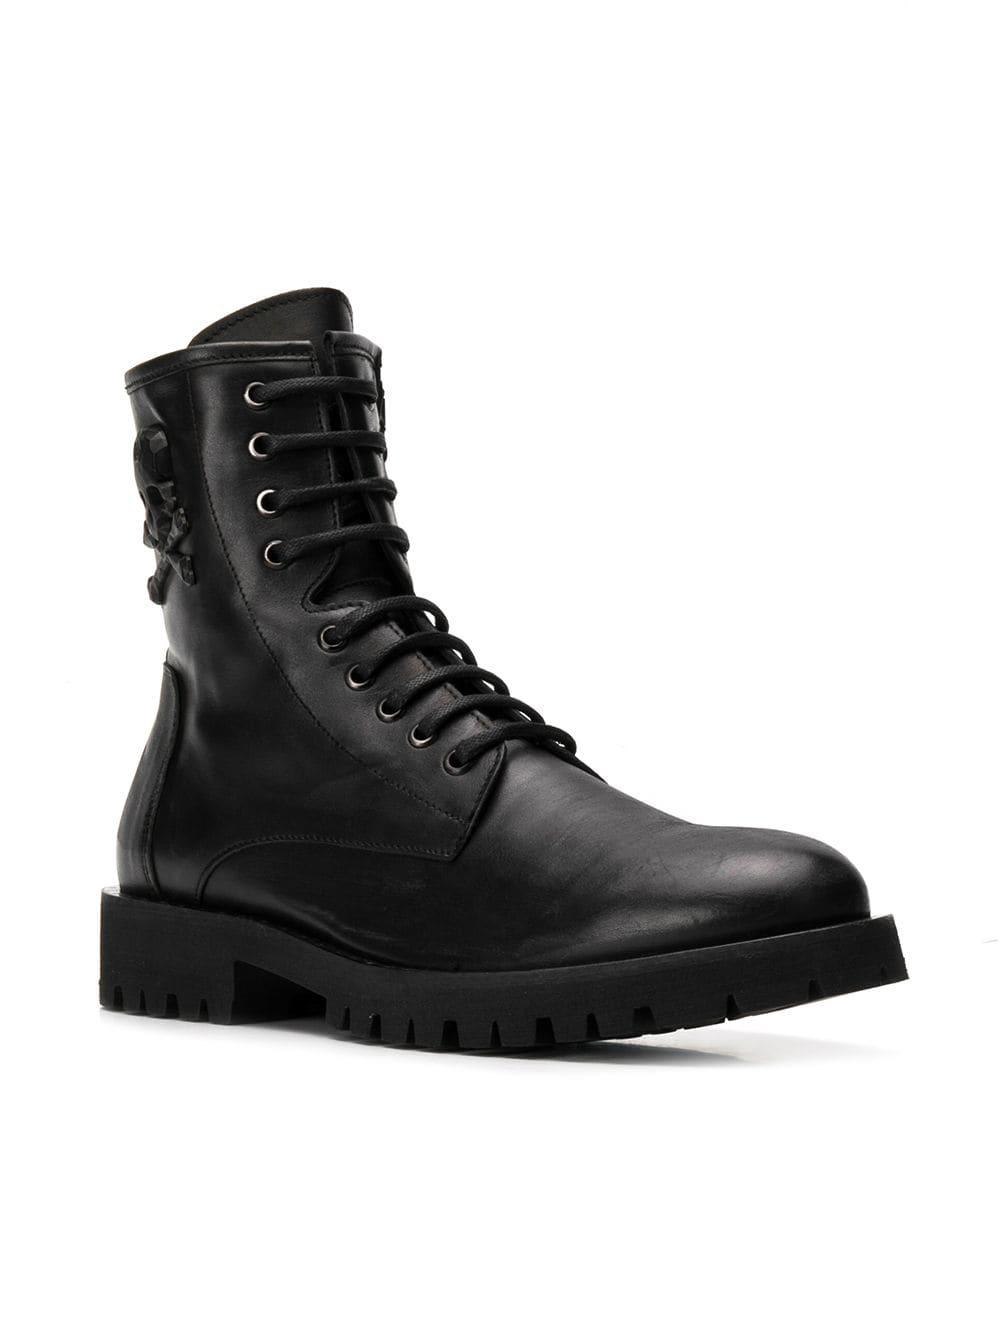 Philipp Plein Leather Rock Man Boots in Black for Men - Lyst